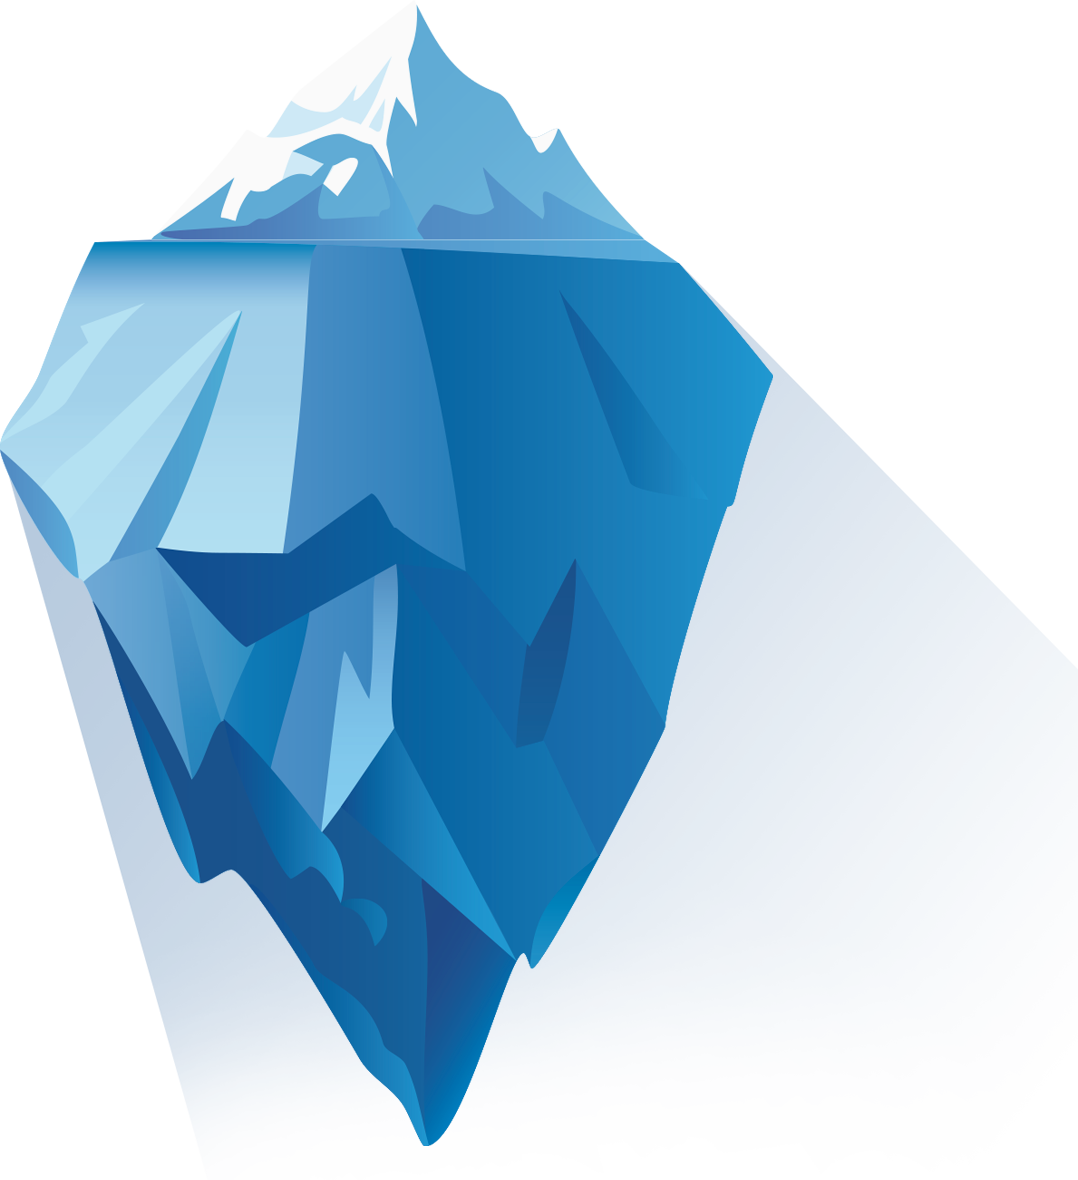 Iceberg Transparent Image